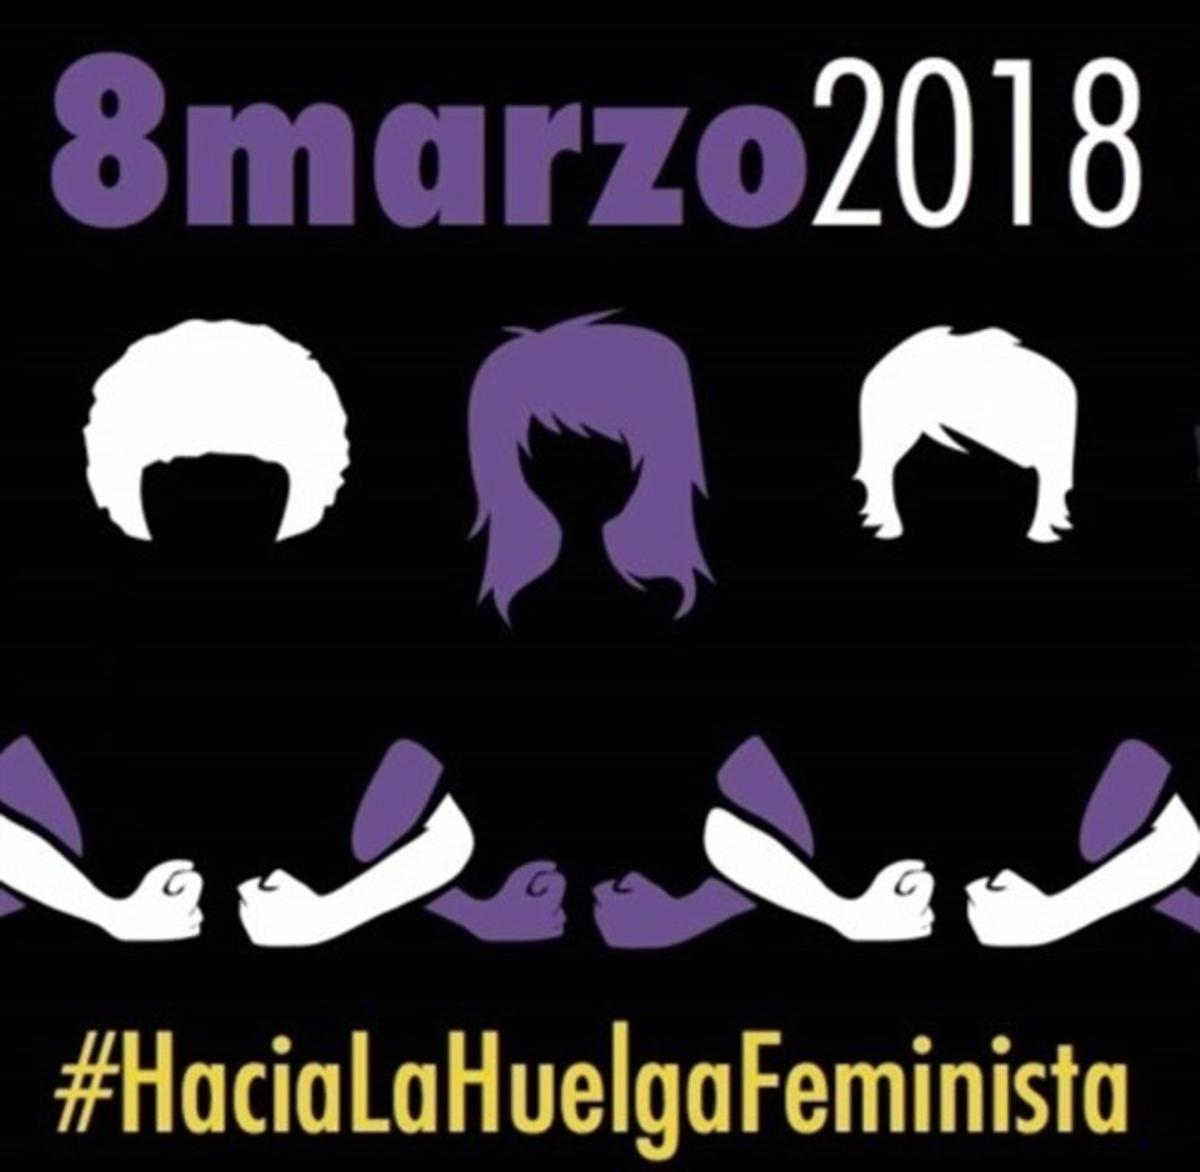 Huelga Feminista del 8 de marzo de 2018.